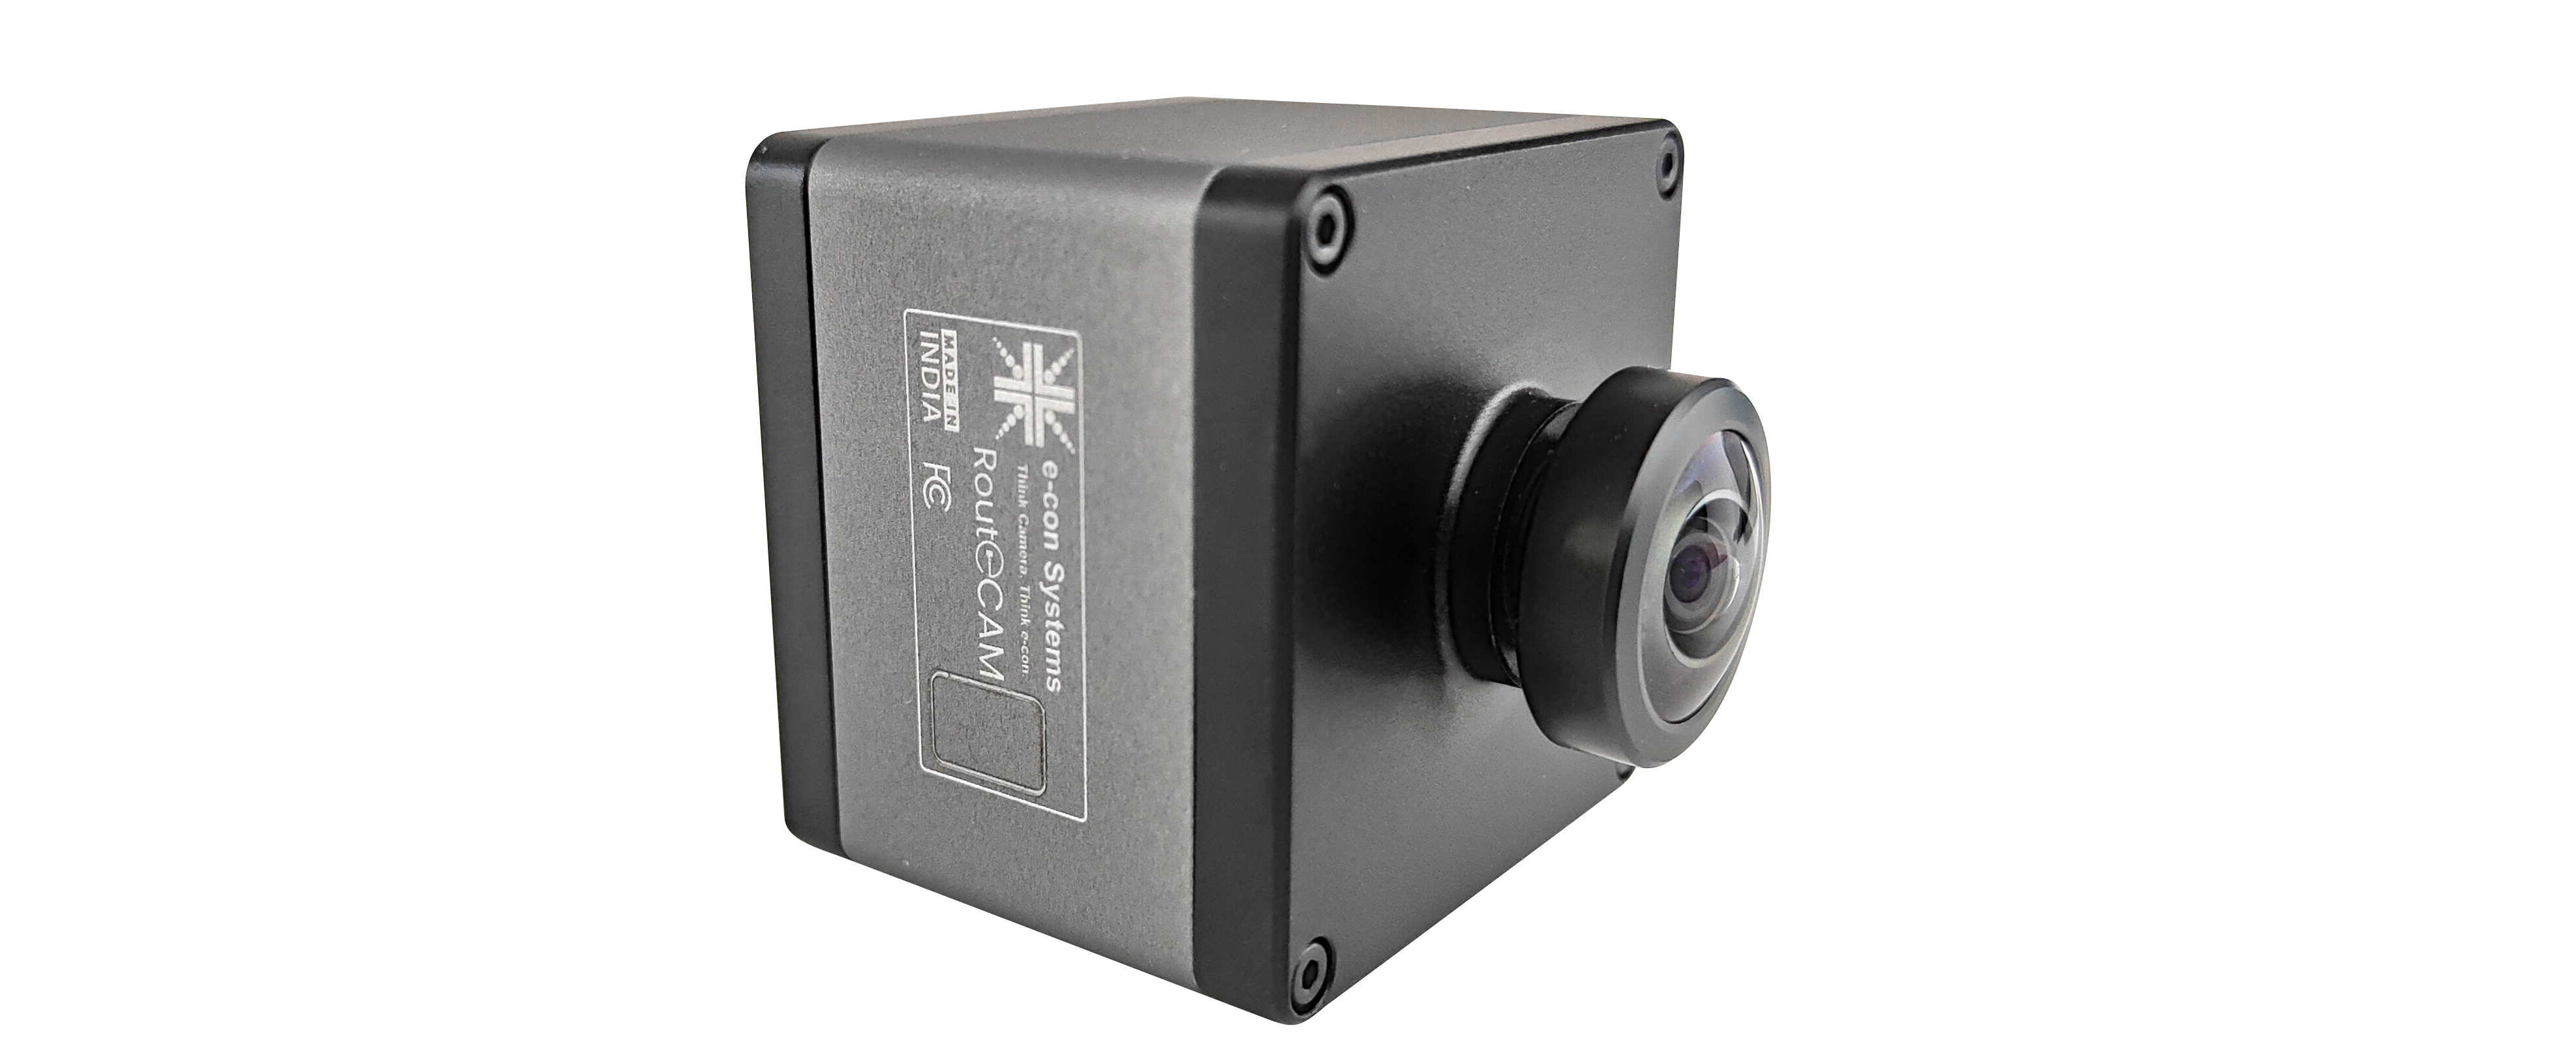 e-con Systems™ launches IP67 HDR PoE camera